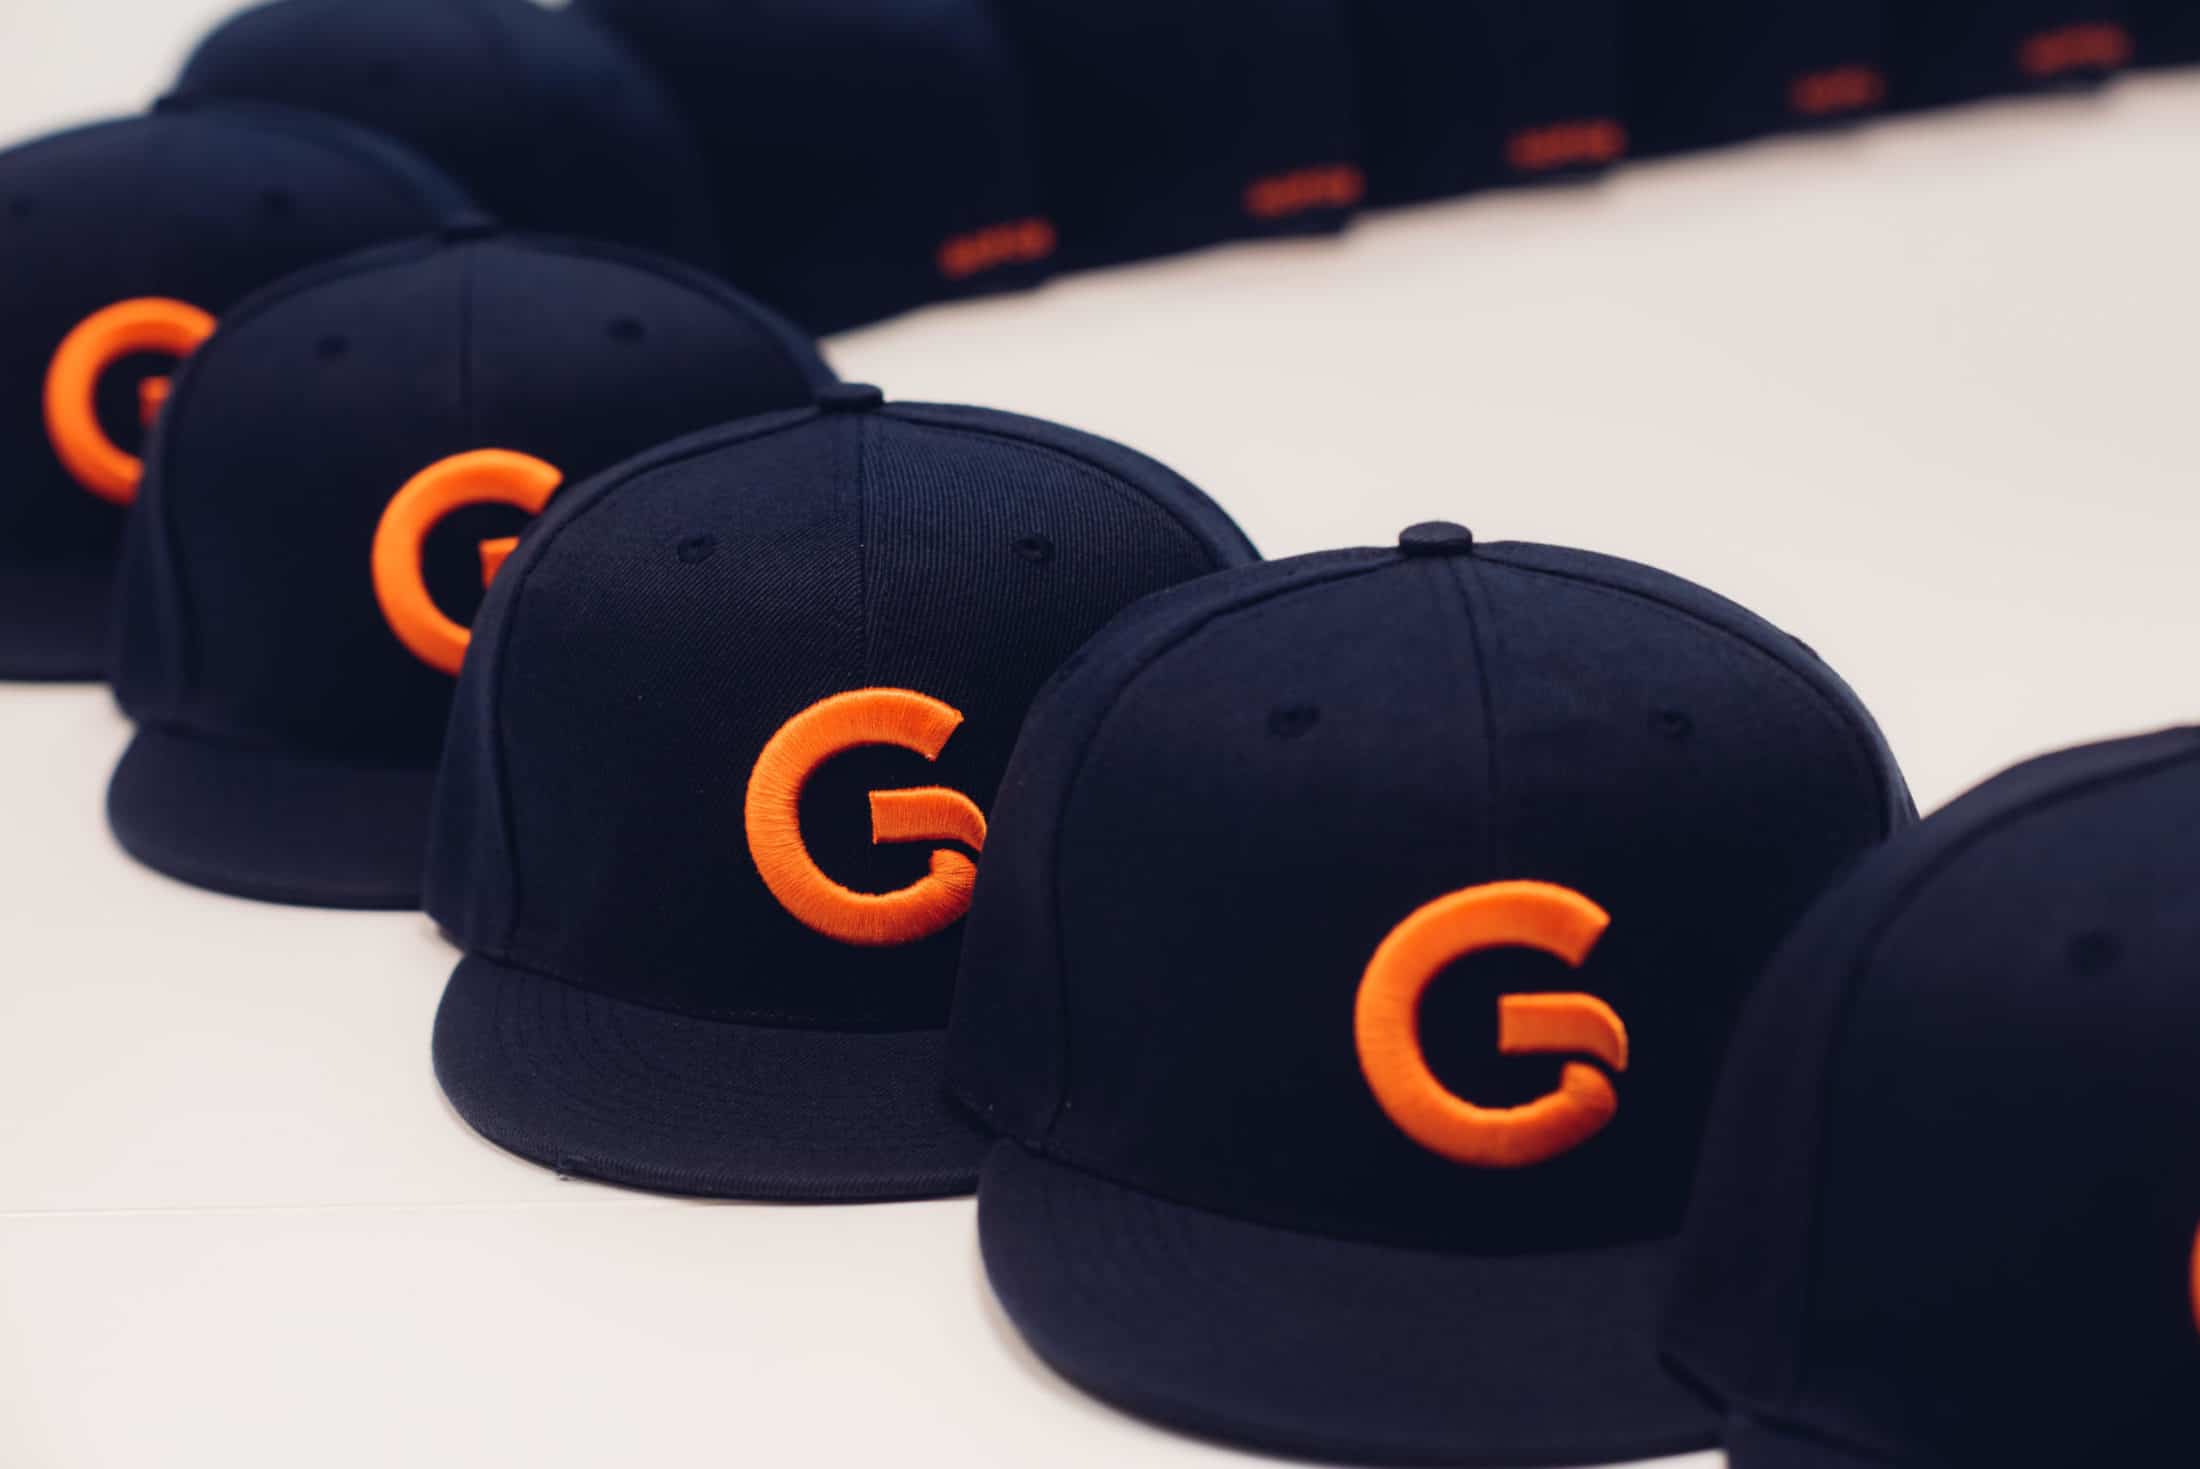 Gofore Crew hats